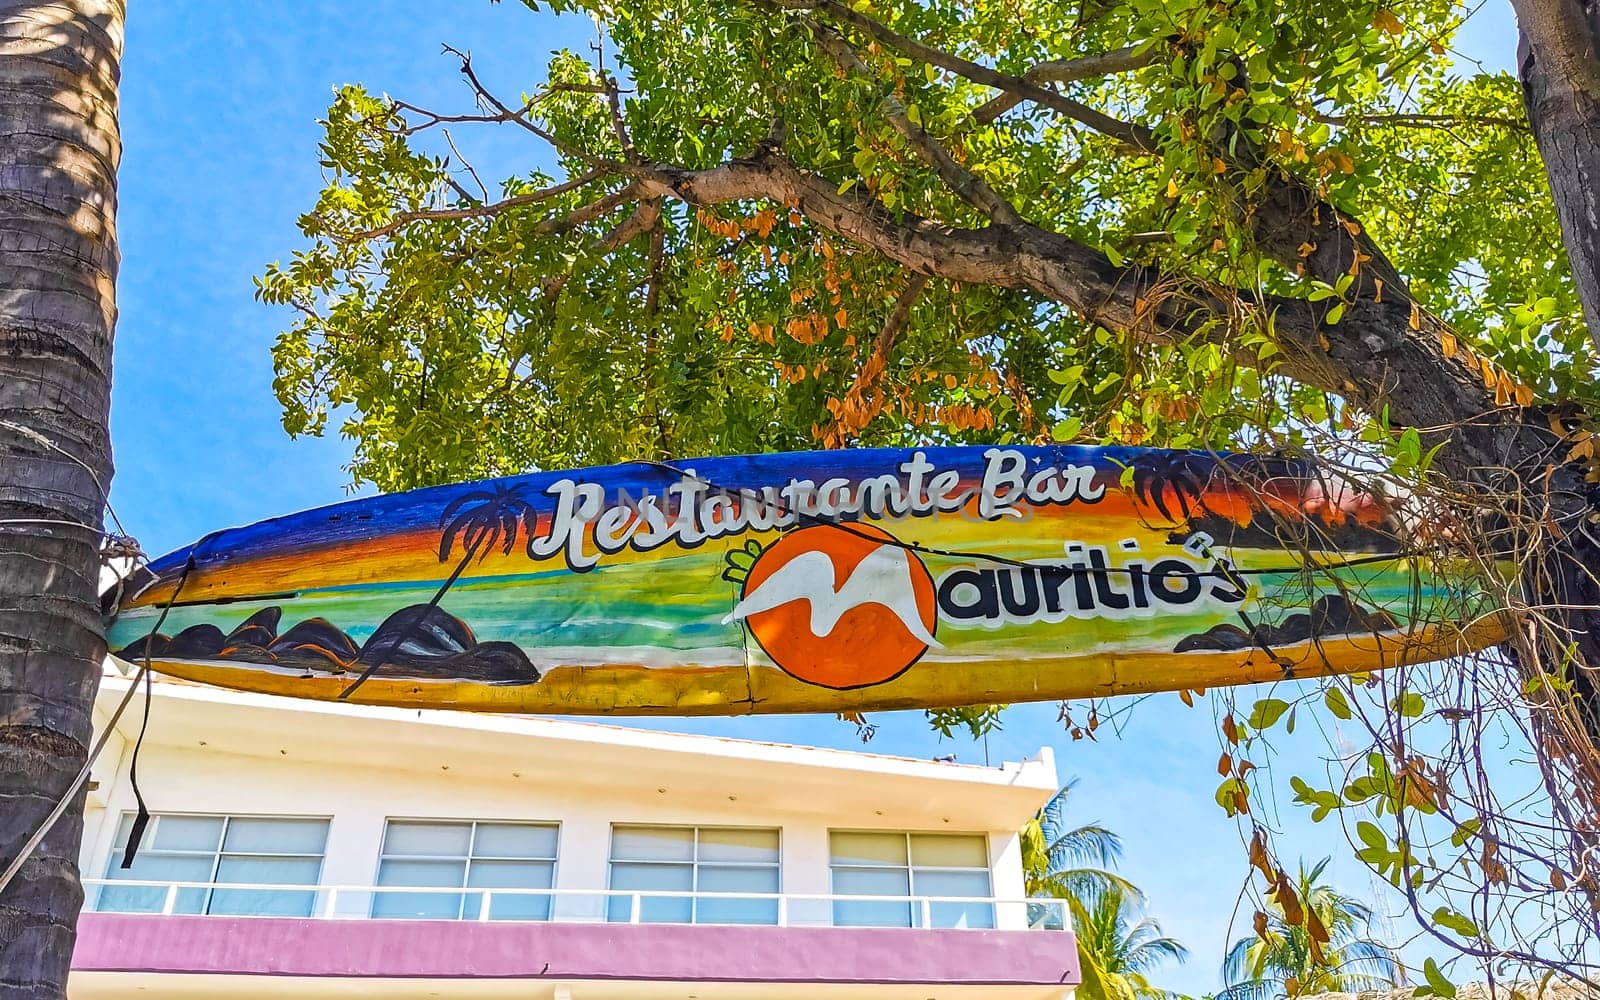 Advertising sign on surfboard surf board in Zicatela Puerto Escondido Oaxaca Mexico.